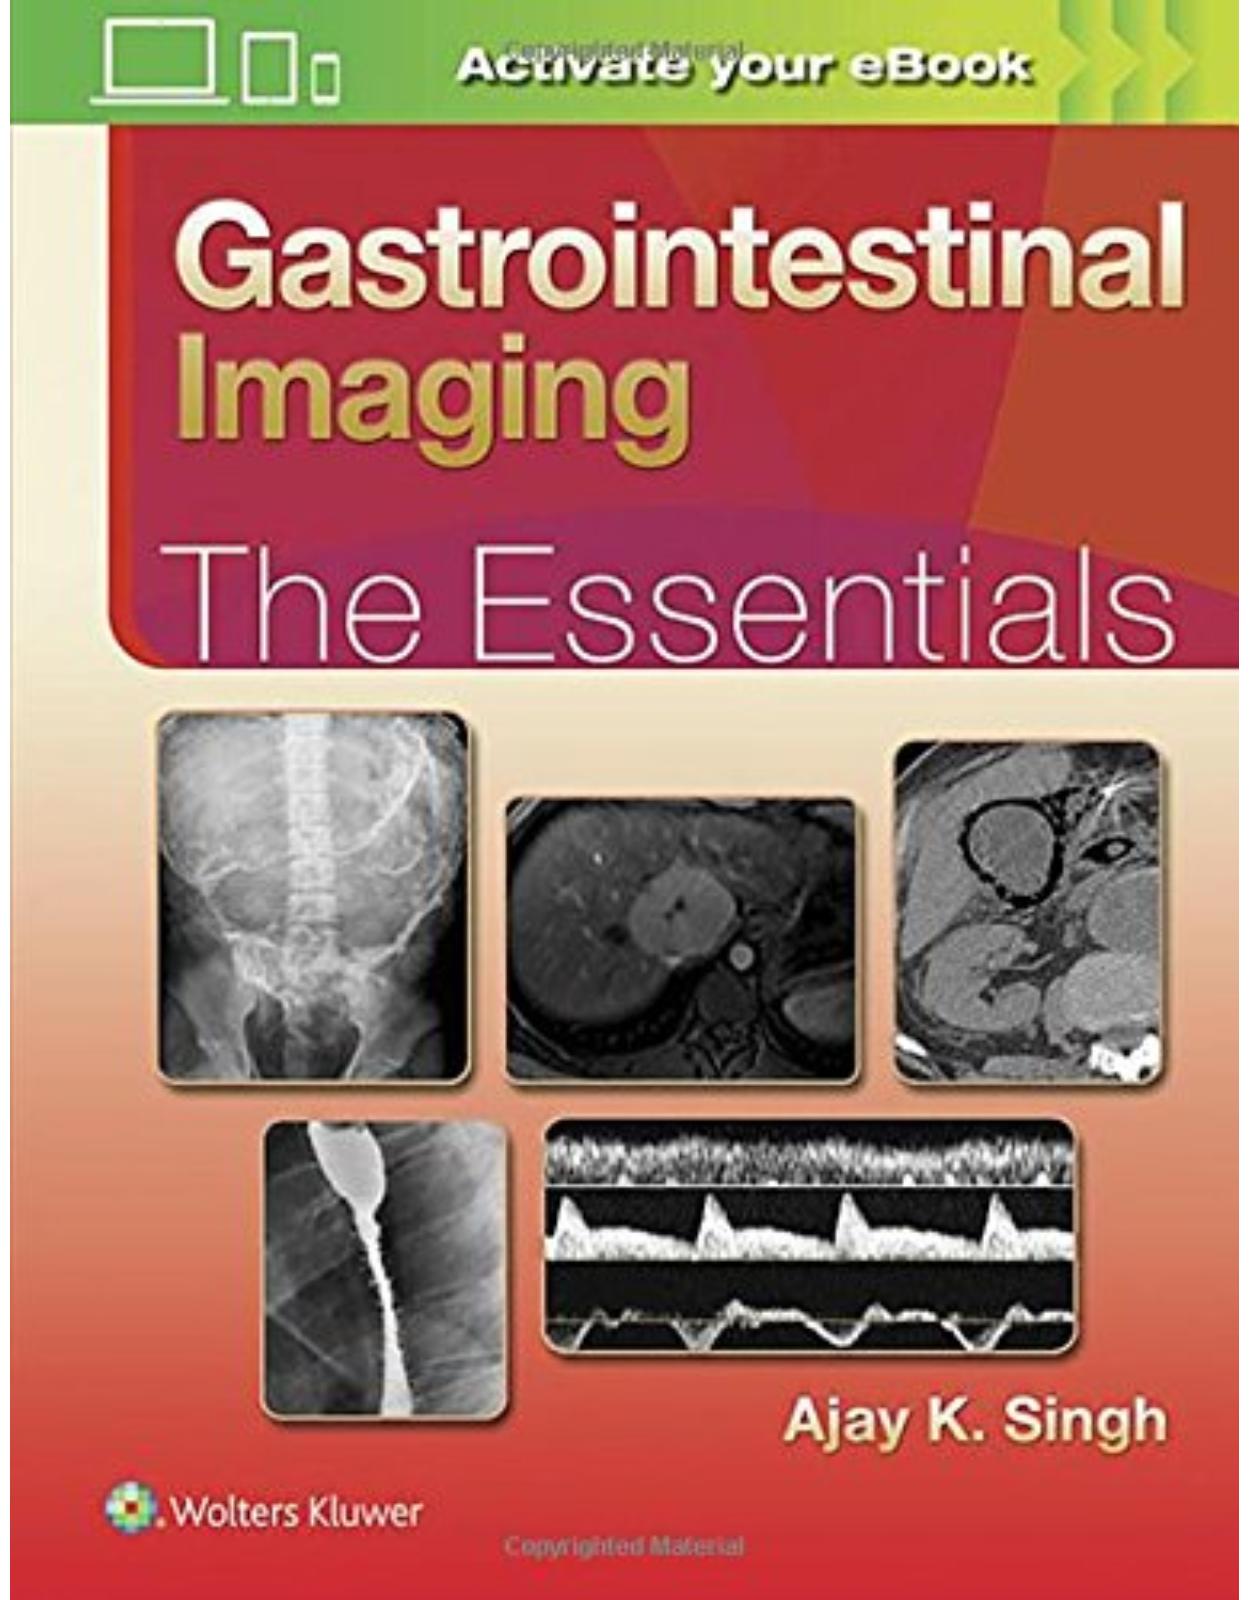 Gastrointestinal Imaging: The Essentials (Essentials Series) 